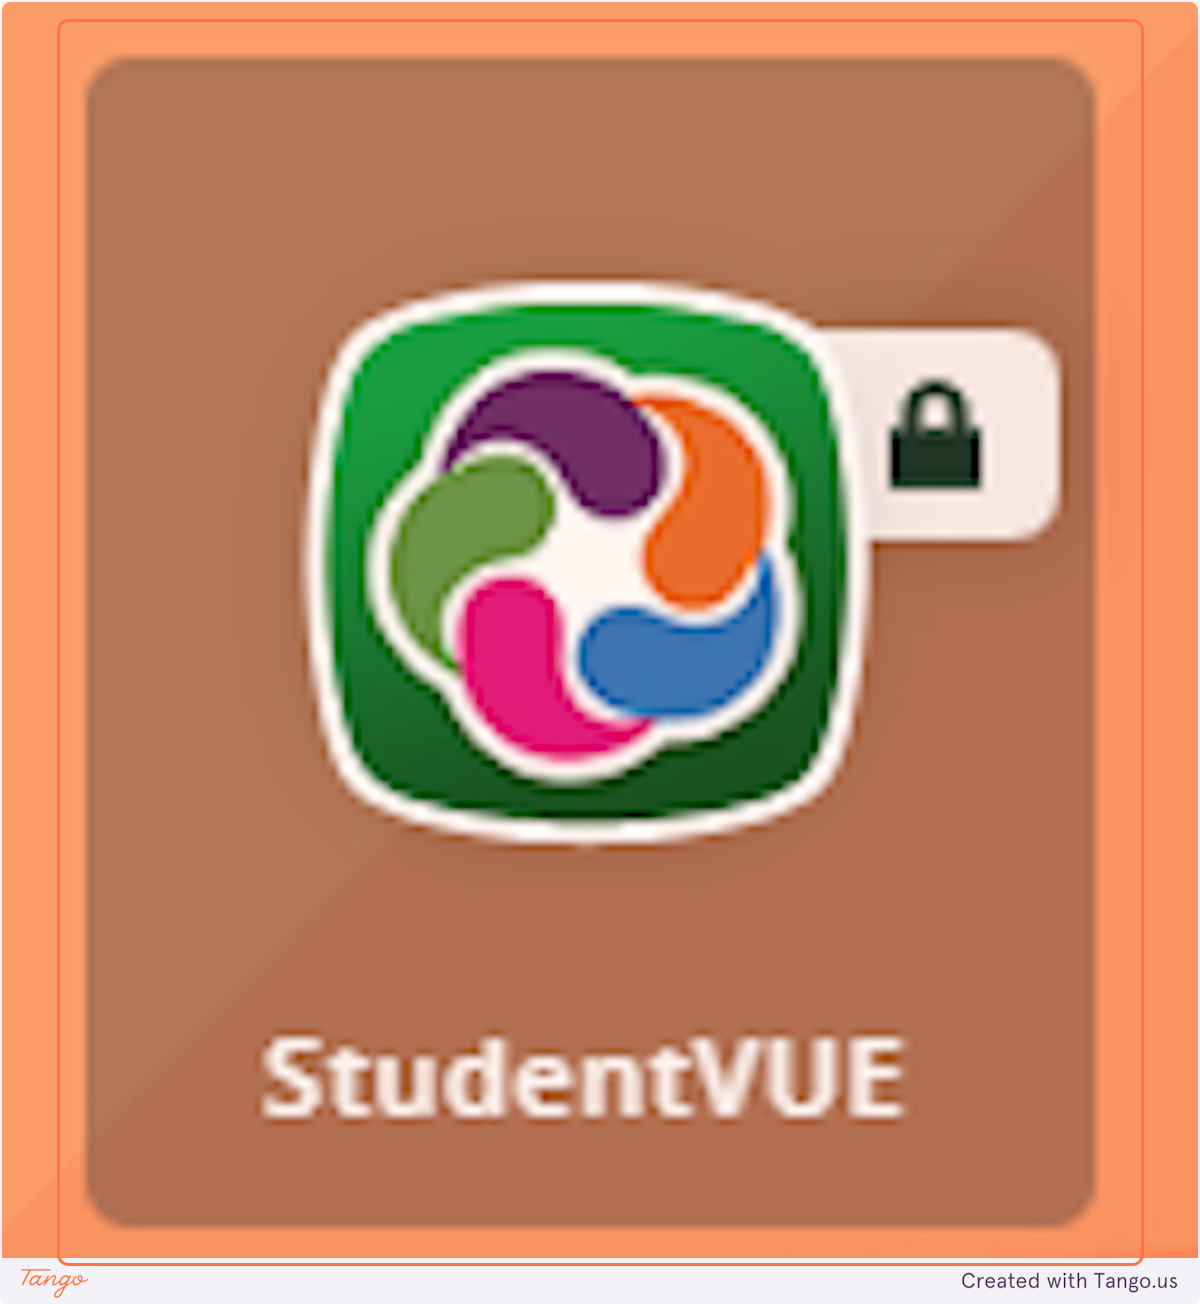 Click on StudentVUE